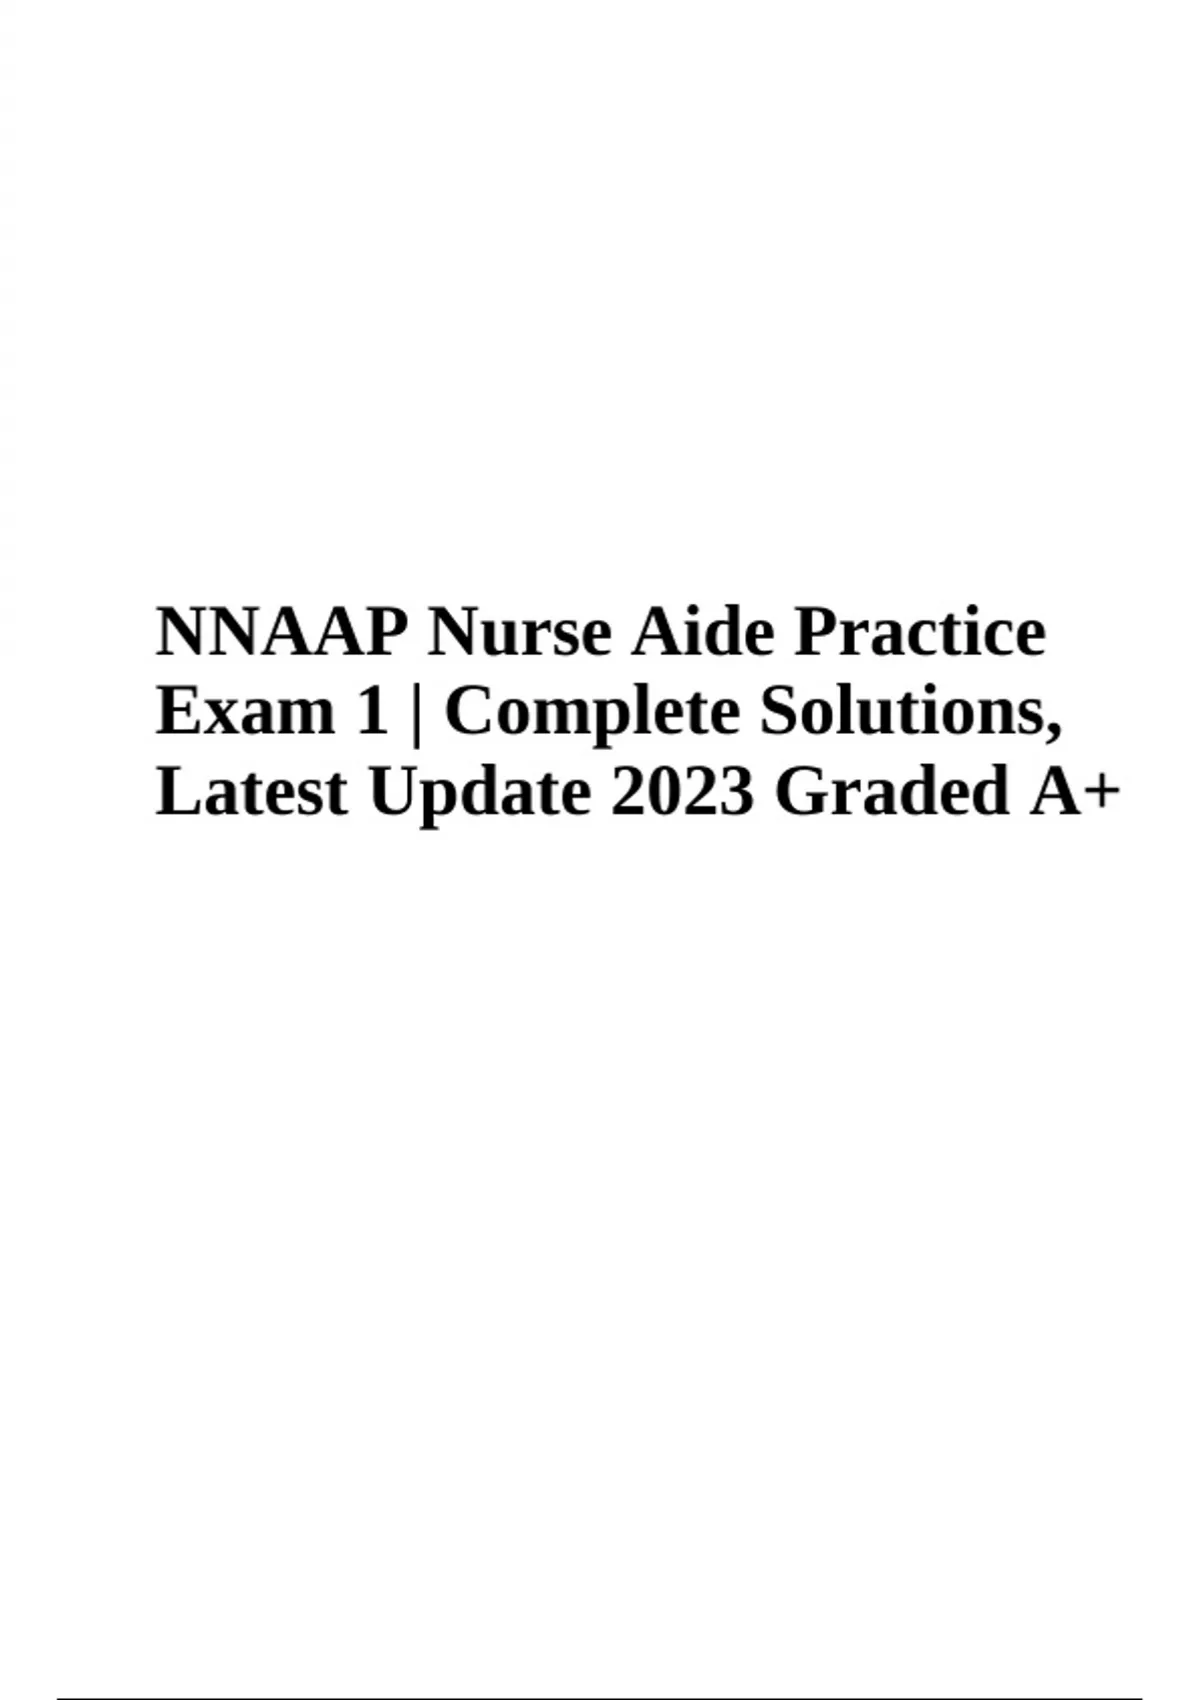 NNAAP Nurse Aide Practice Exam 1 Complete Solutions, Latest Update